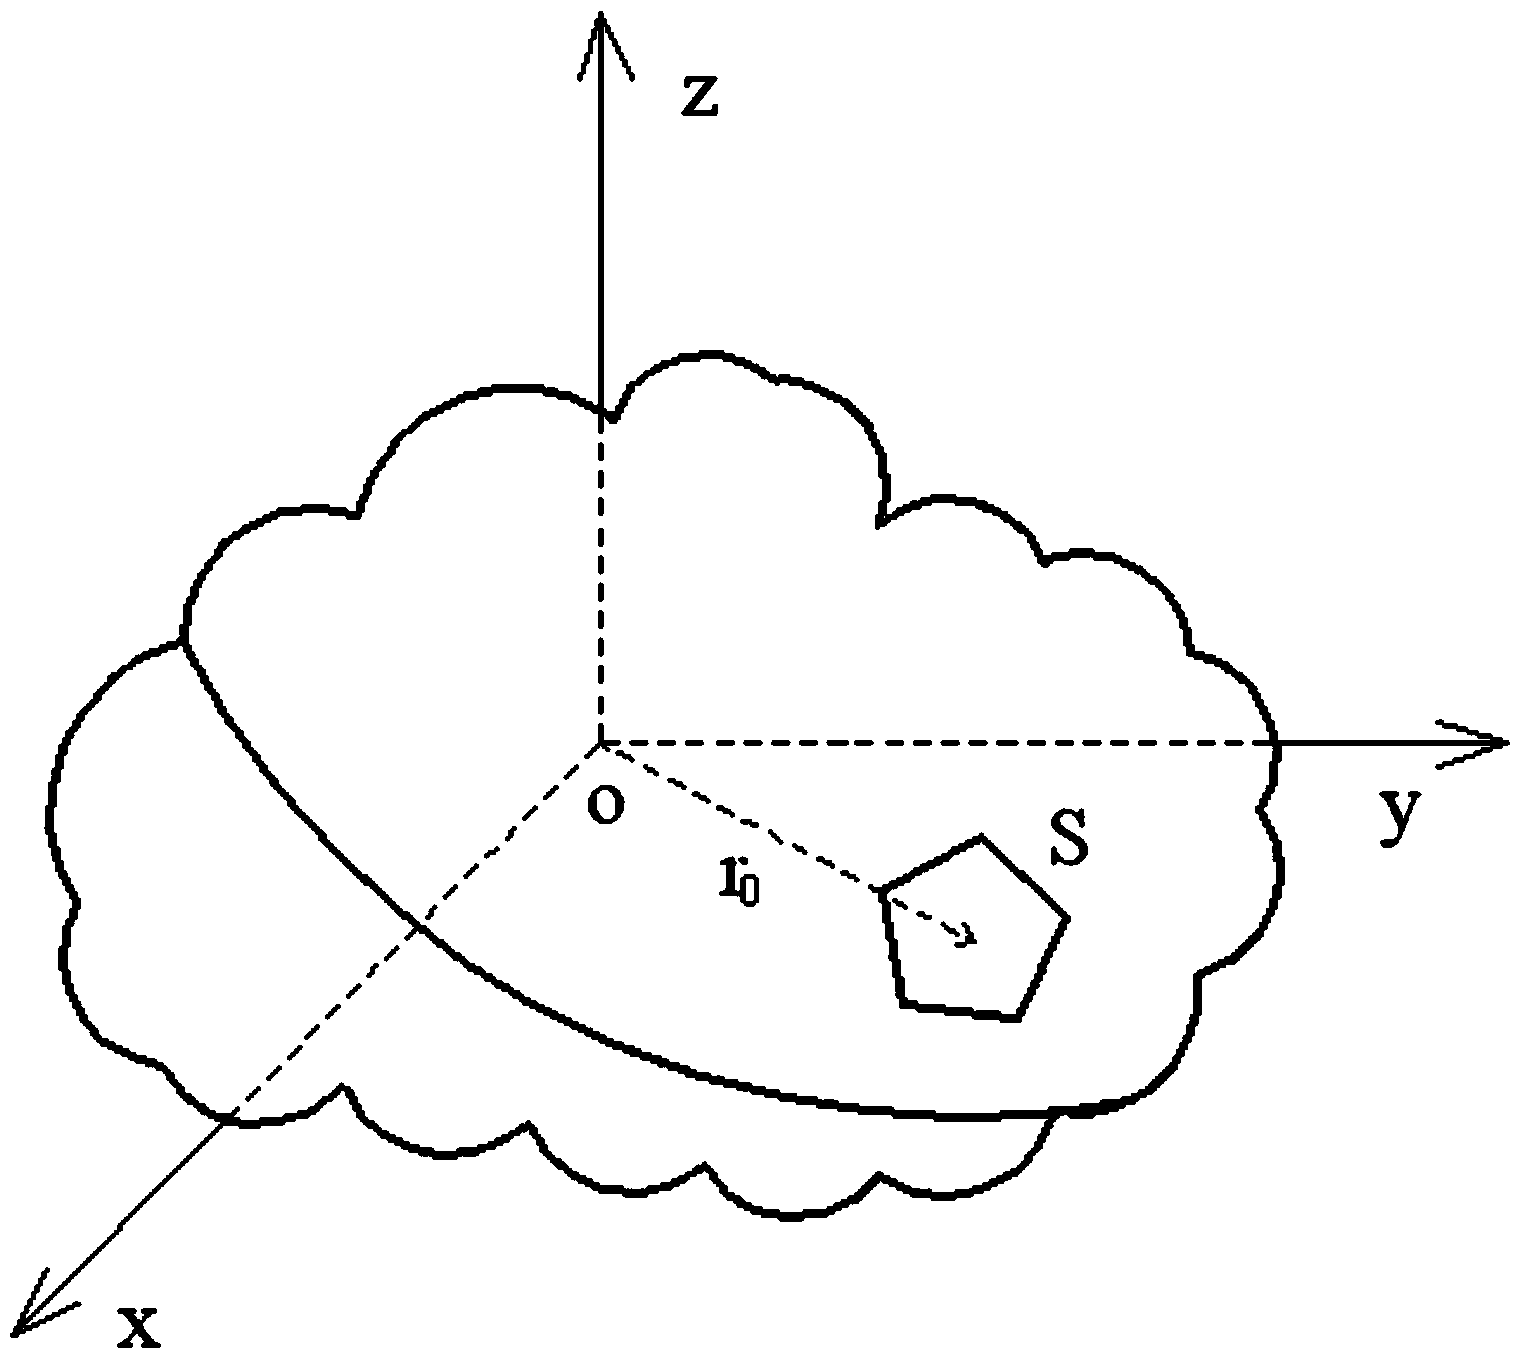 Method for calculating radar cross section of corner reflector